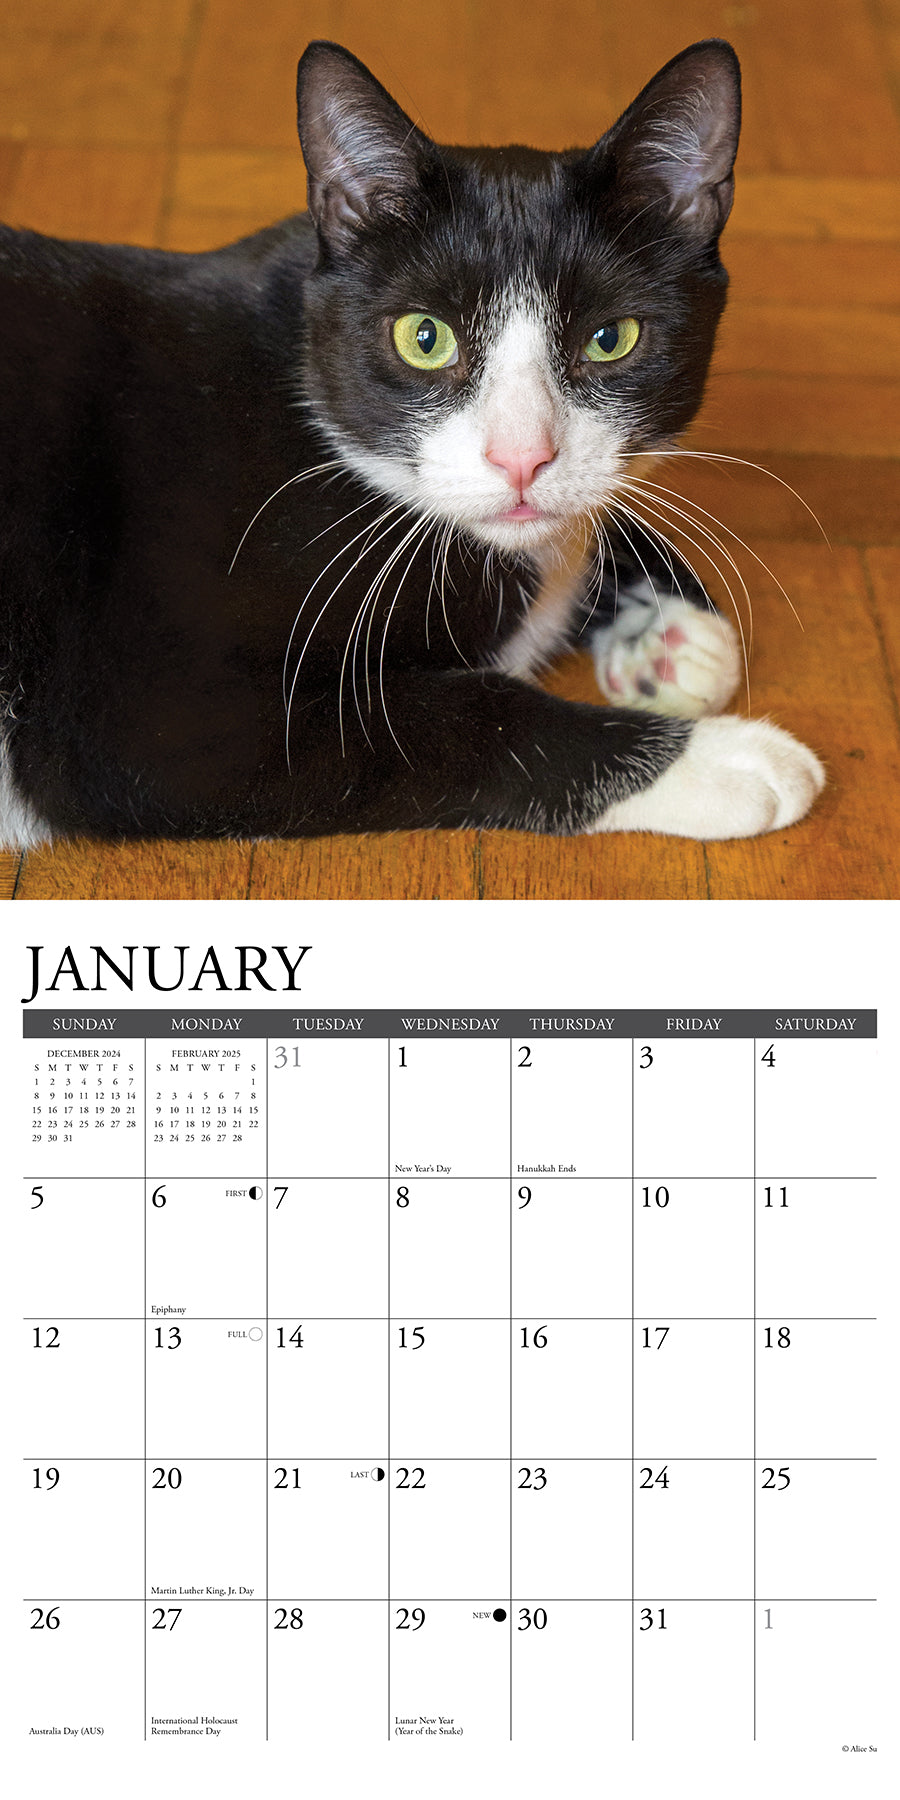 2025 Tuxedo Cats - Square Wall Calendar